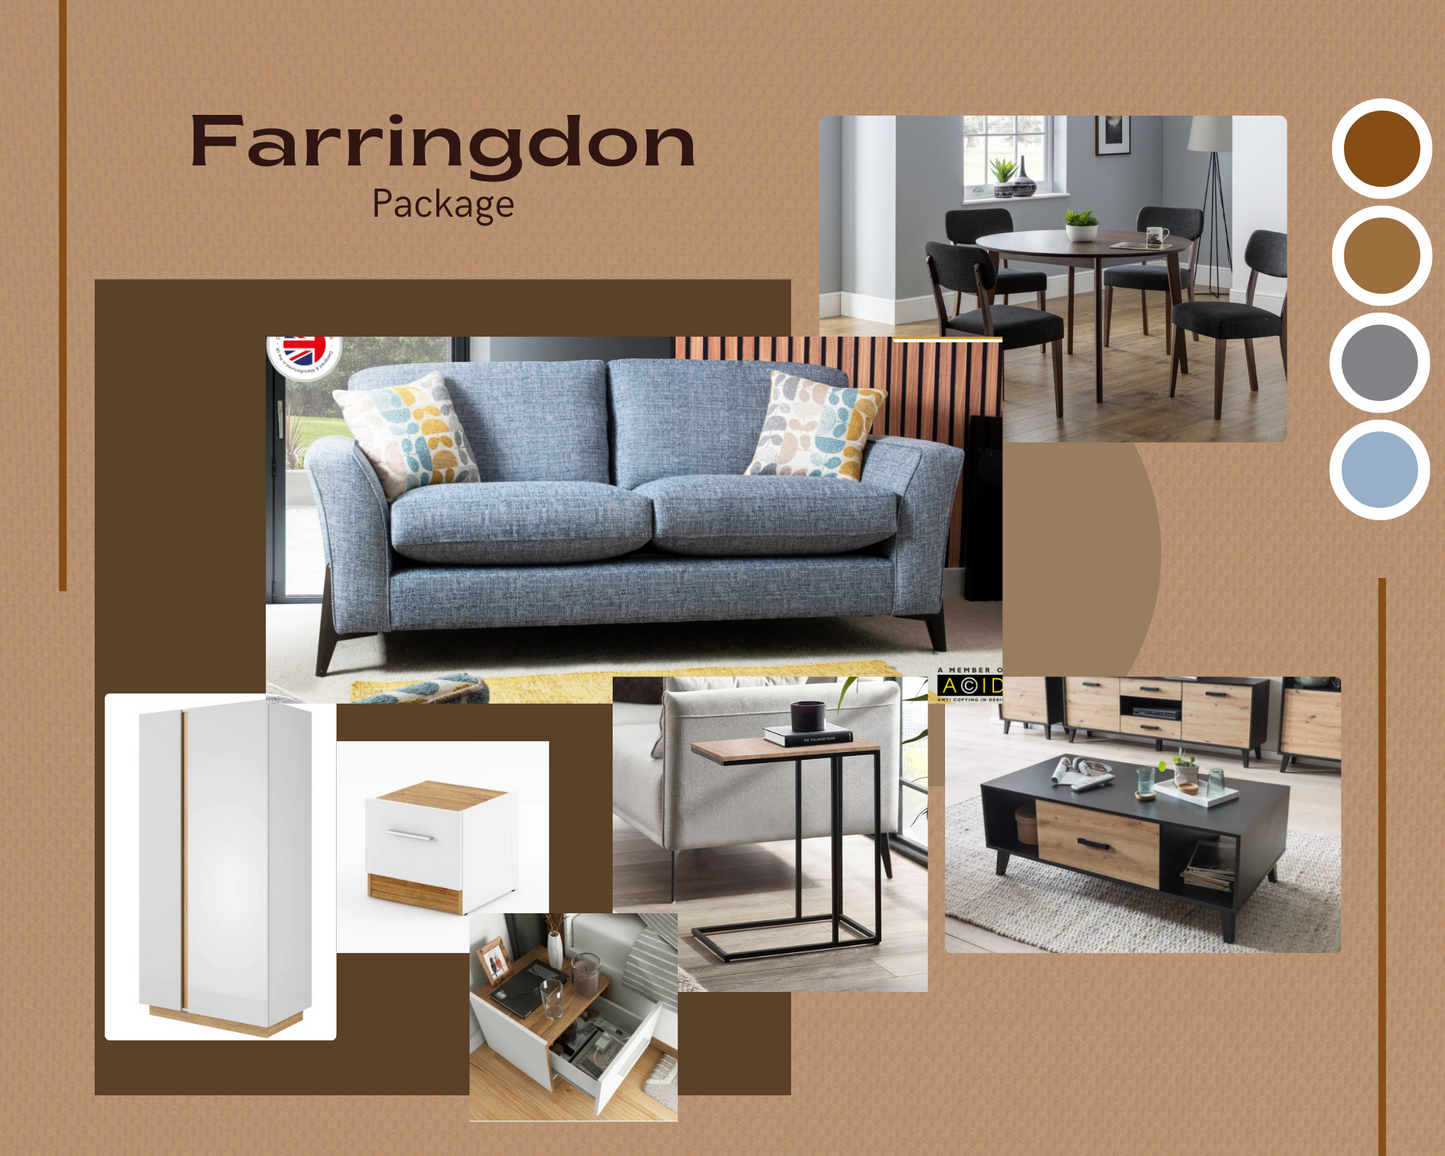 Farringdon Package